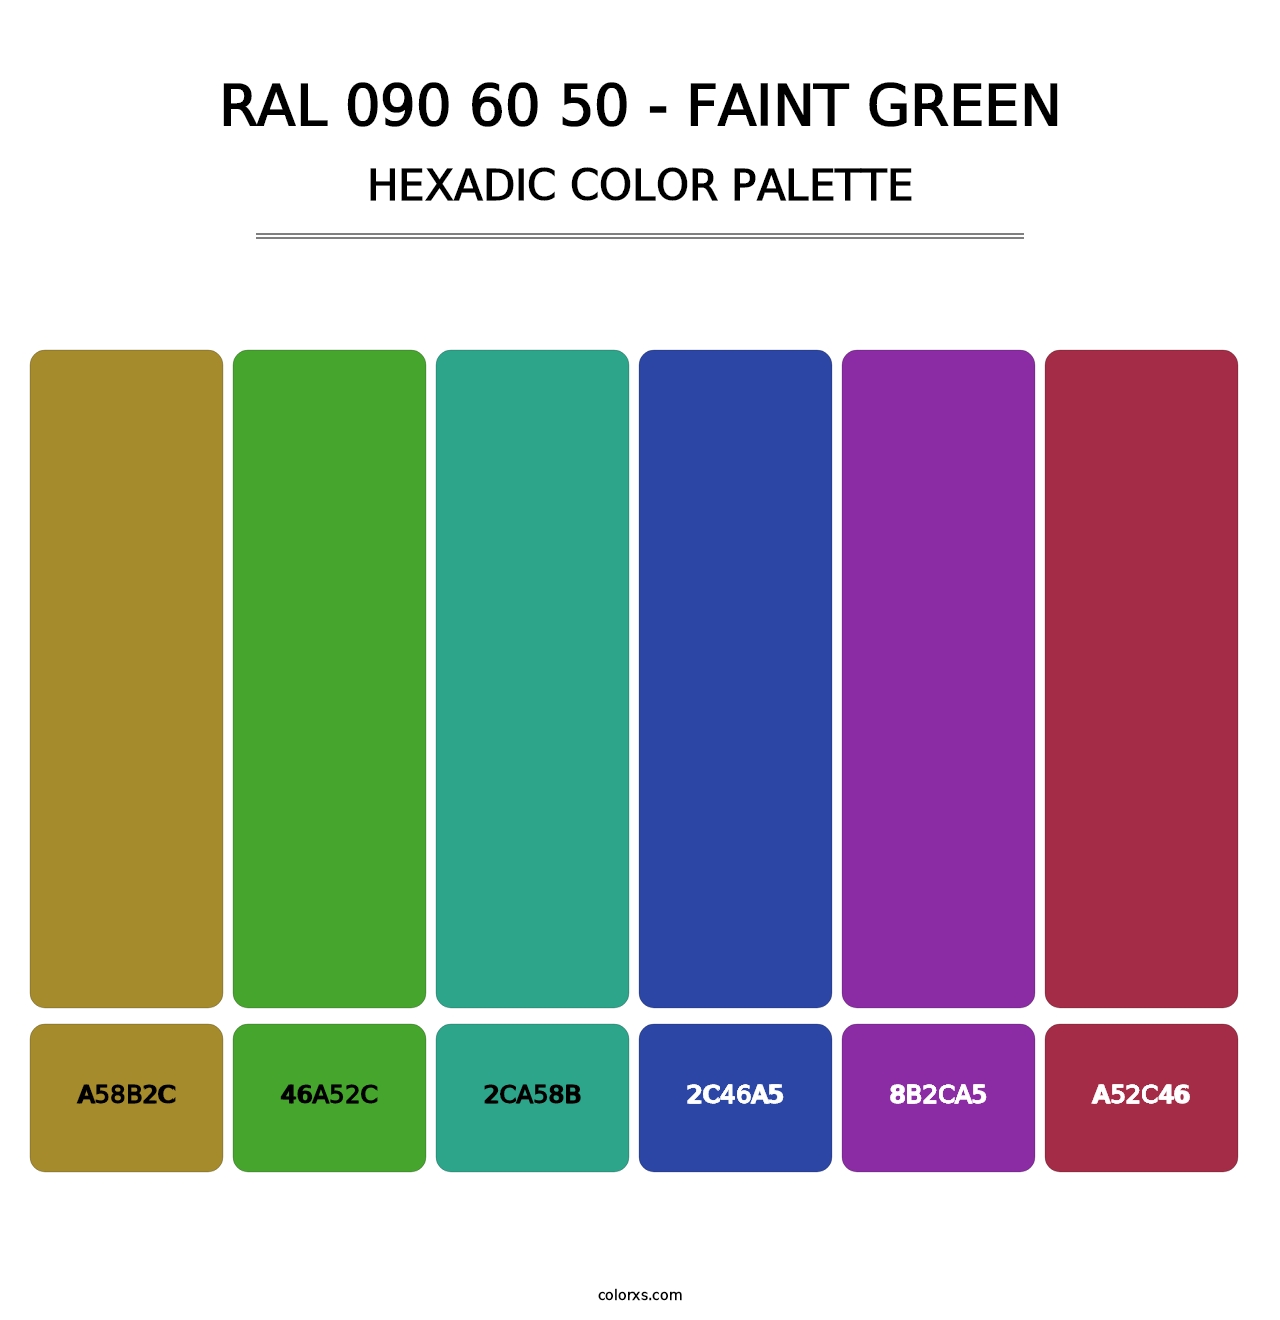 RAL 090 60 50 - Faint Green - Hexadic Color Palette